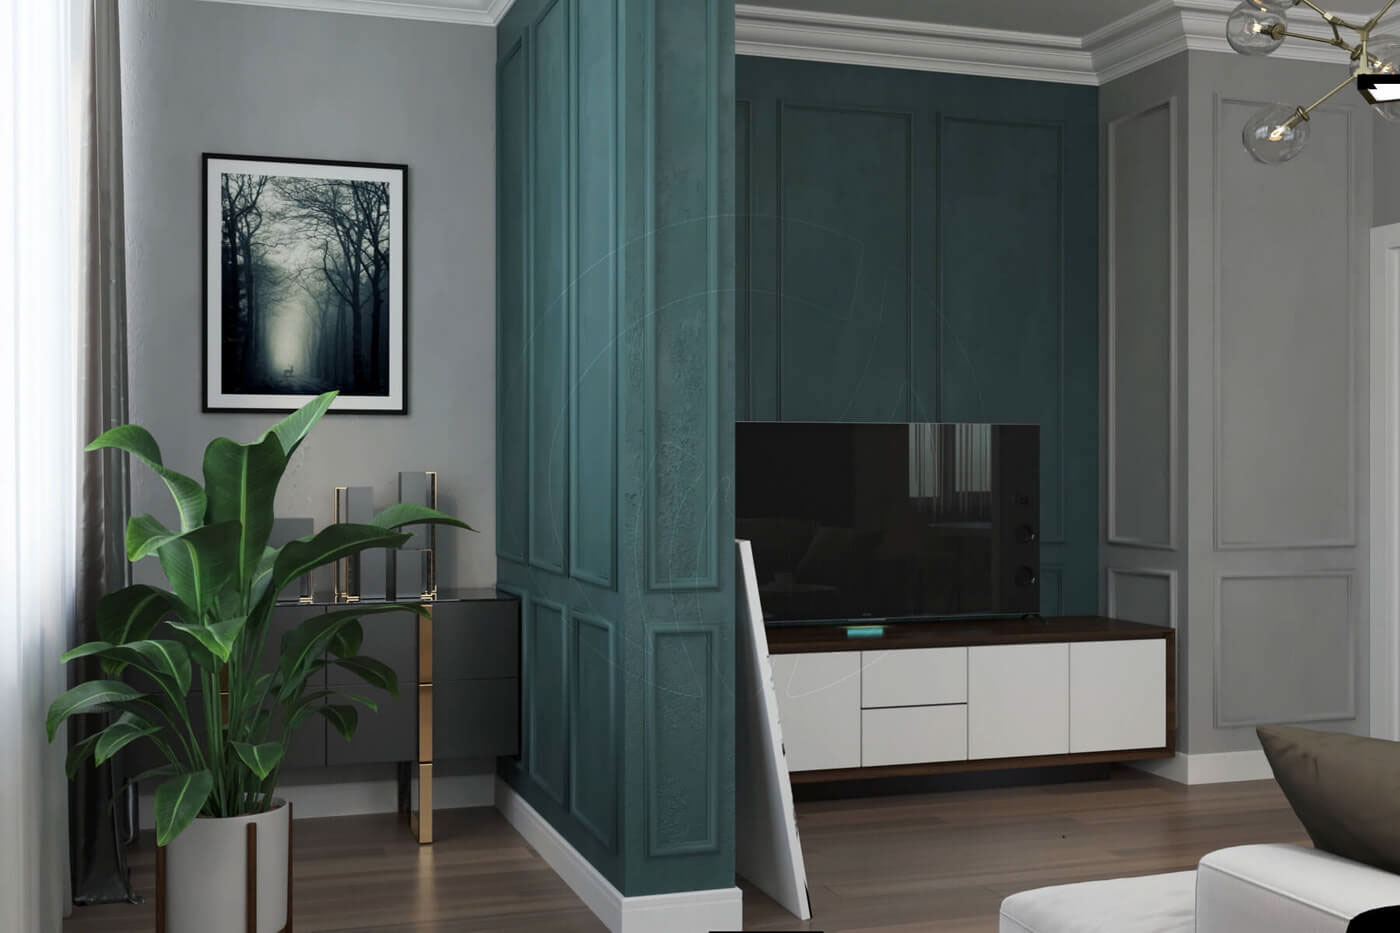 apartment design emerald color modern classic Stucco decor Дизайн квартиры современная классика